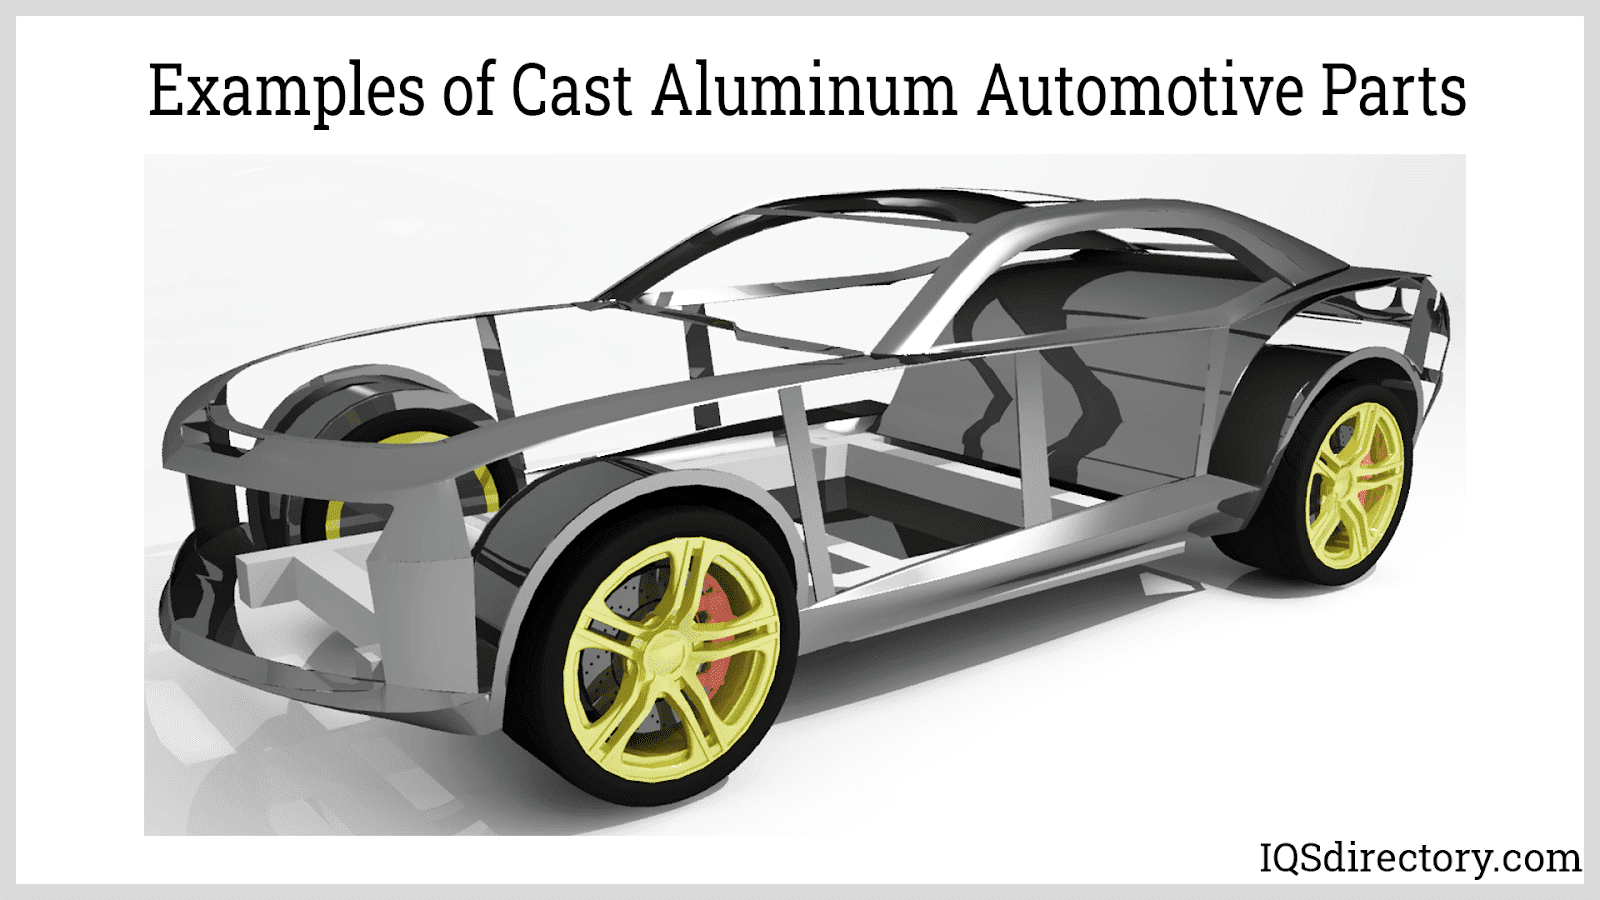 Examples of Cast Aluminum Automotive Parts